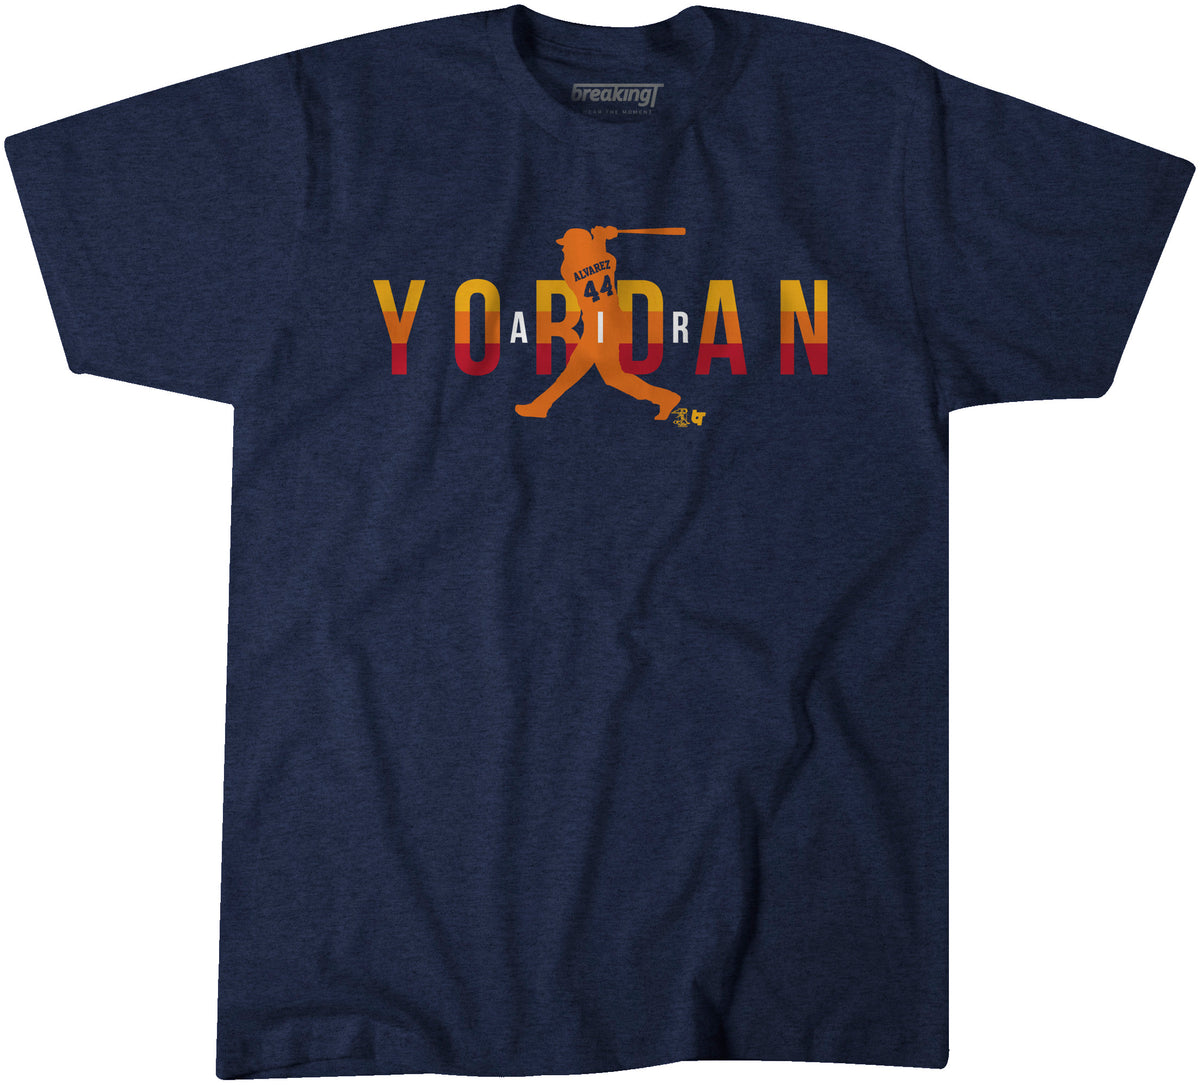 Air Yordan Name + Number Shirt - Officially MLBPA Licensed - BreakingT